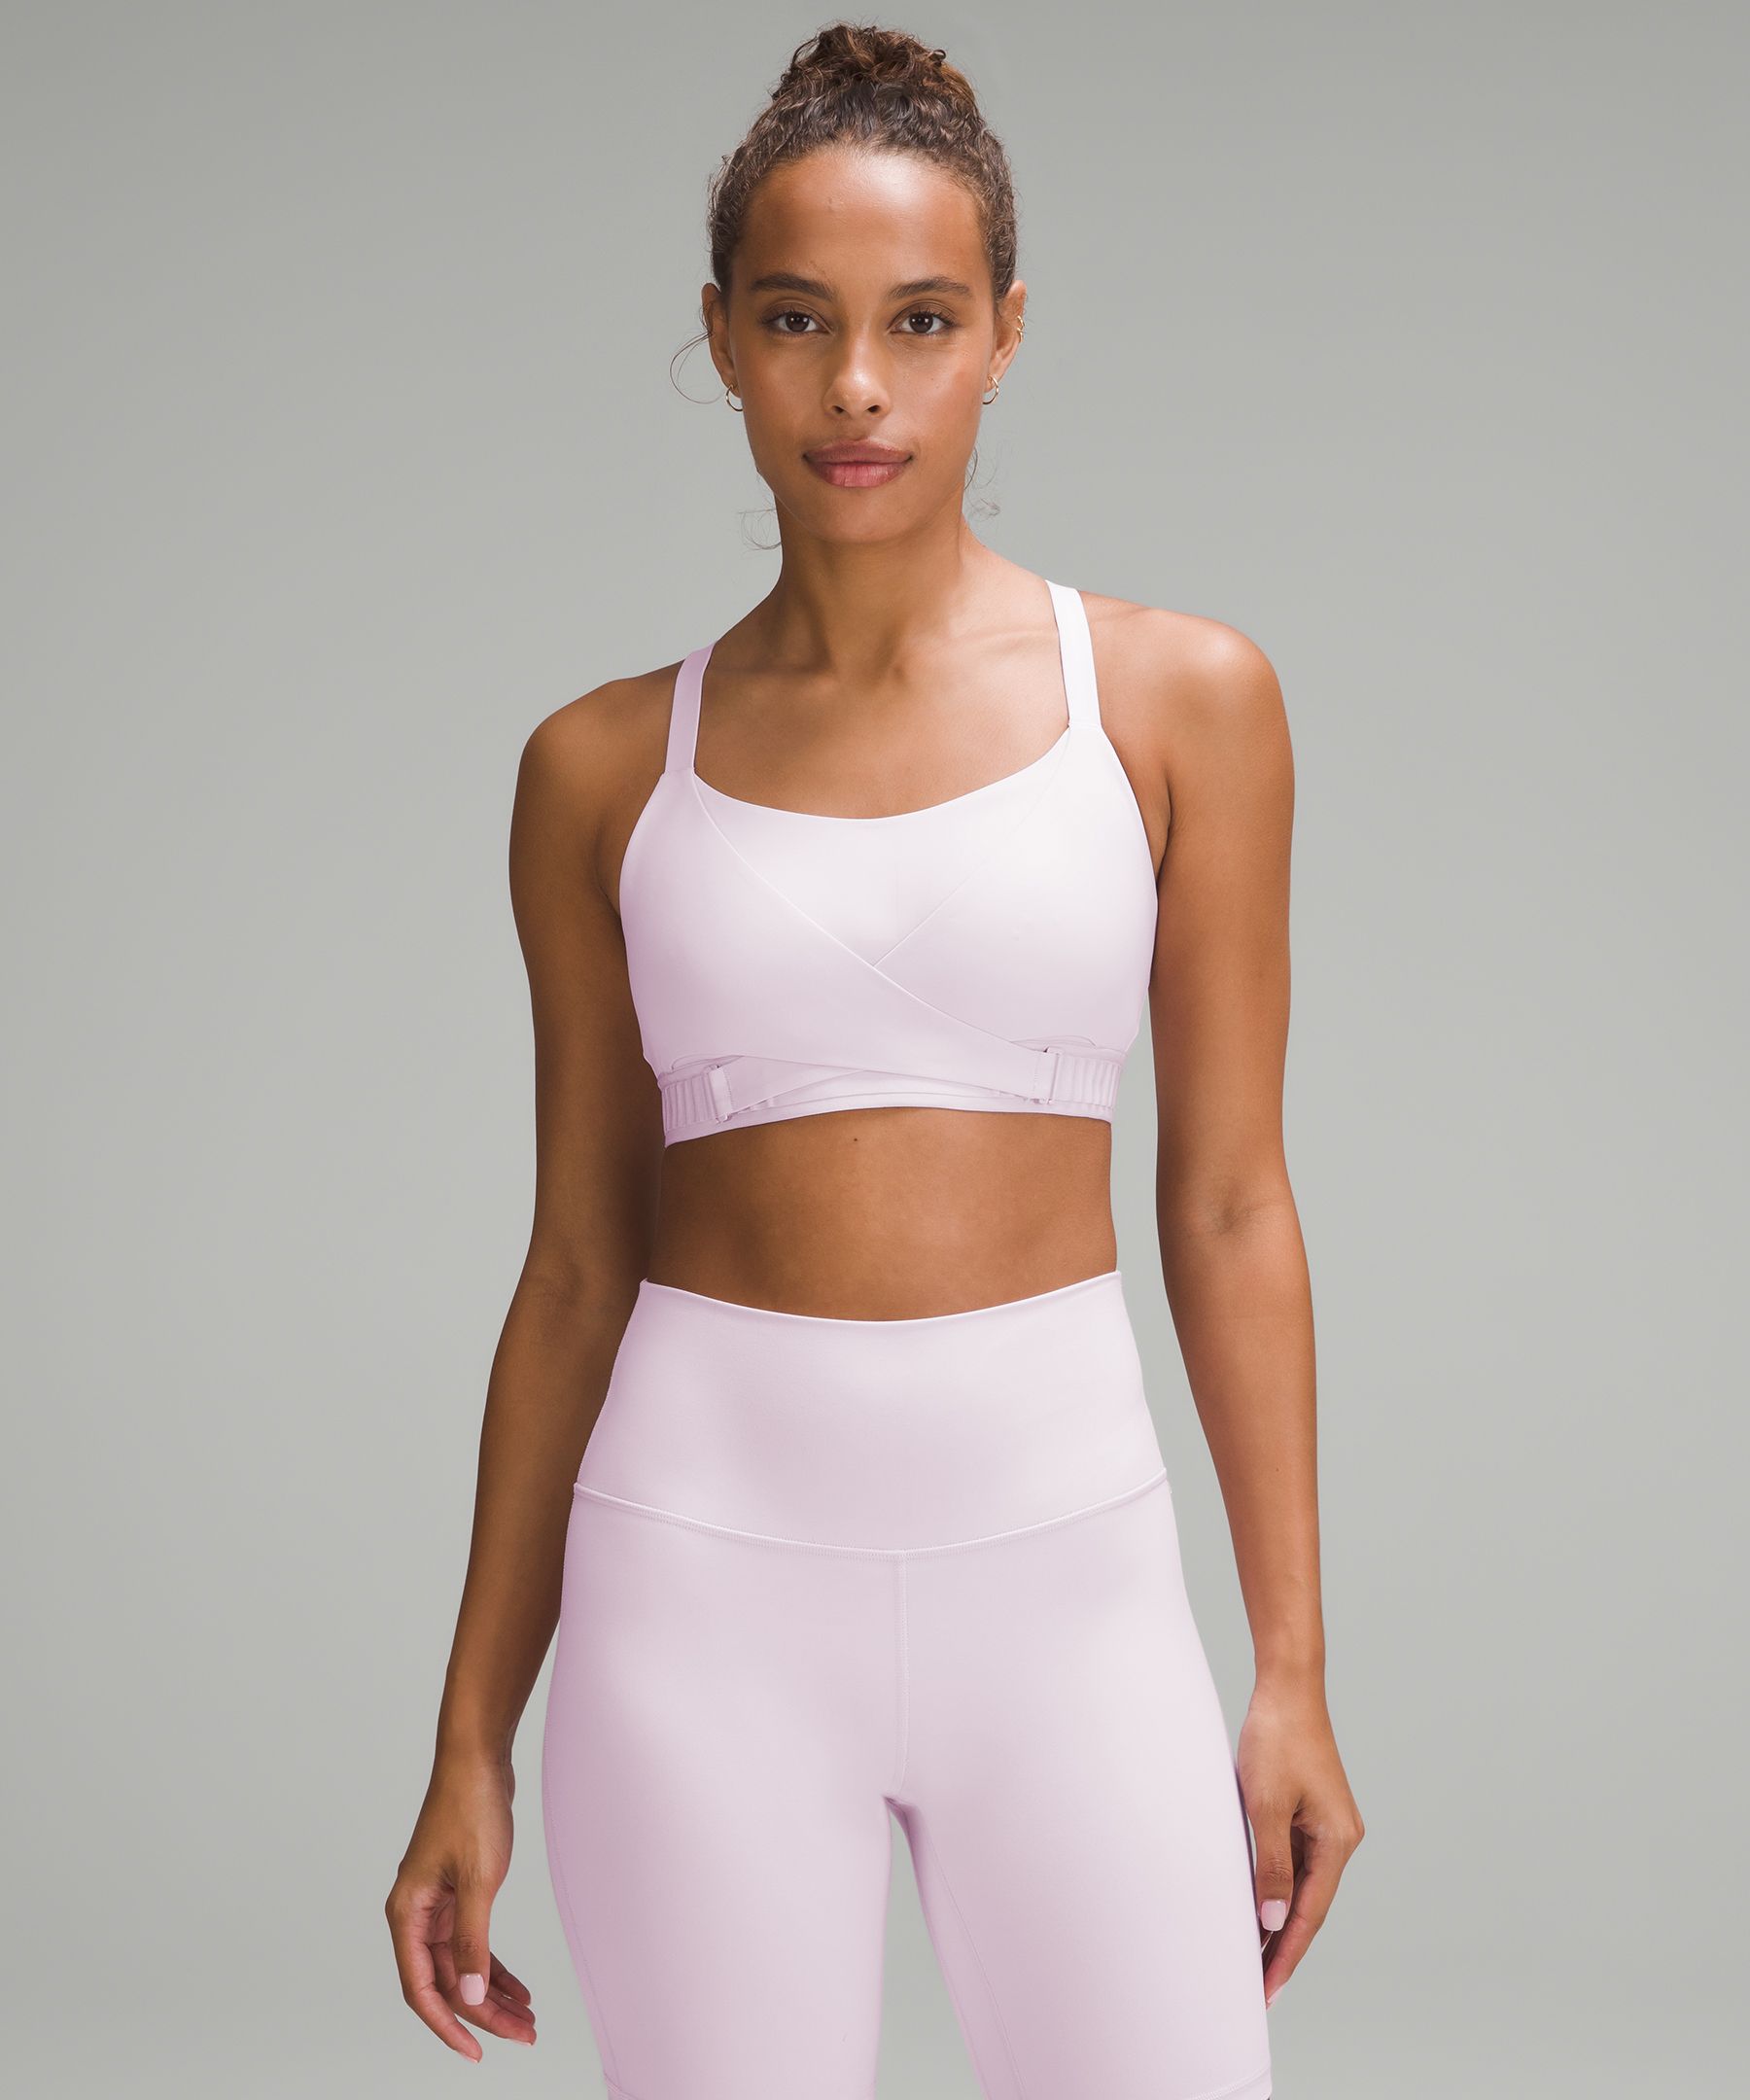 NEW Onzie Core Power Yoga Athletic Sports Bra Women's M/L Purple $49